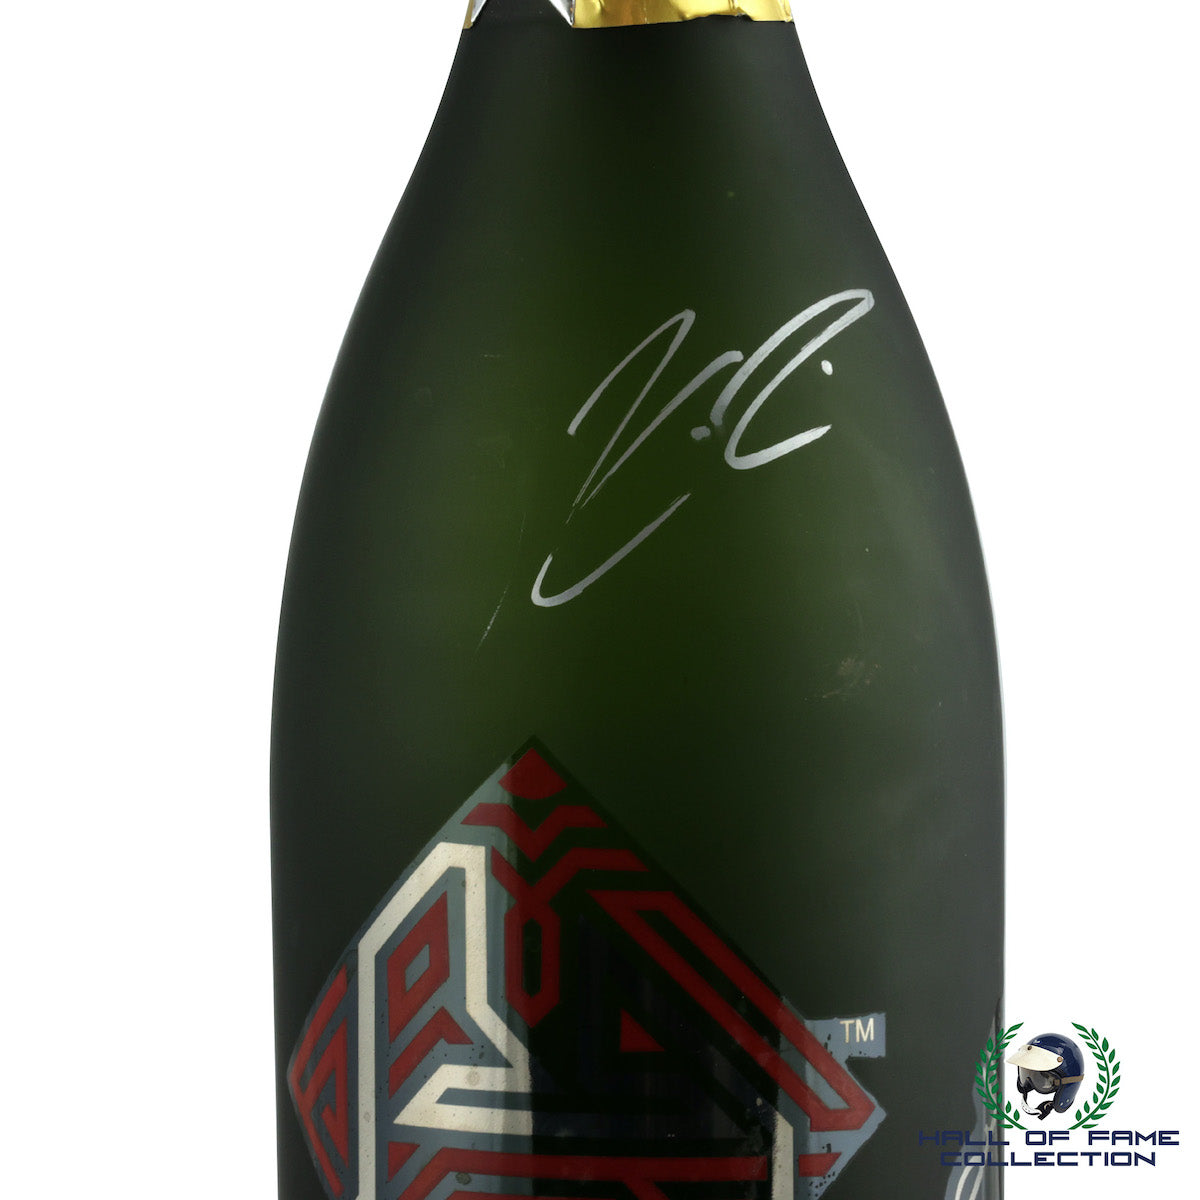 2006 Kimi Raikkonen Signed Bahrain Grand Prix 3rd Place F1 Podium Bottle